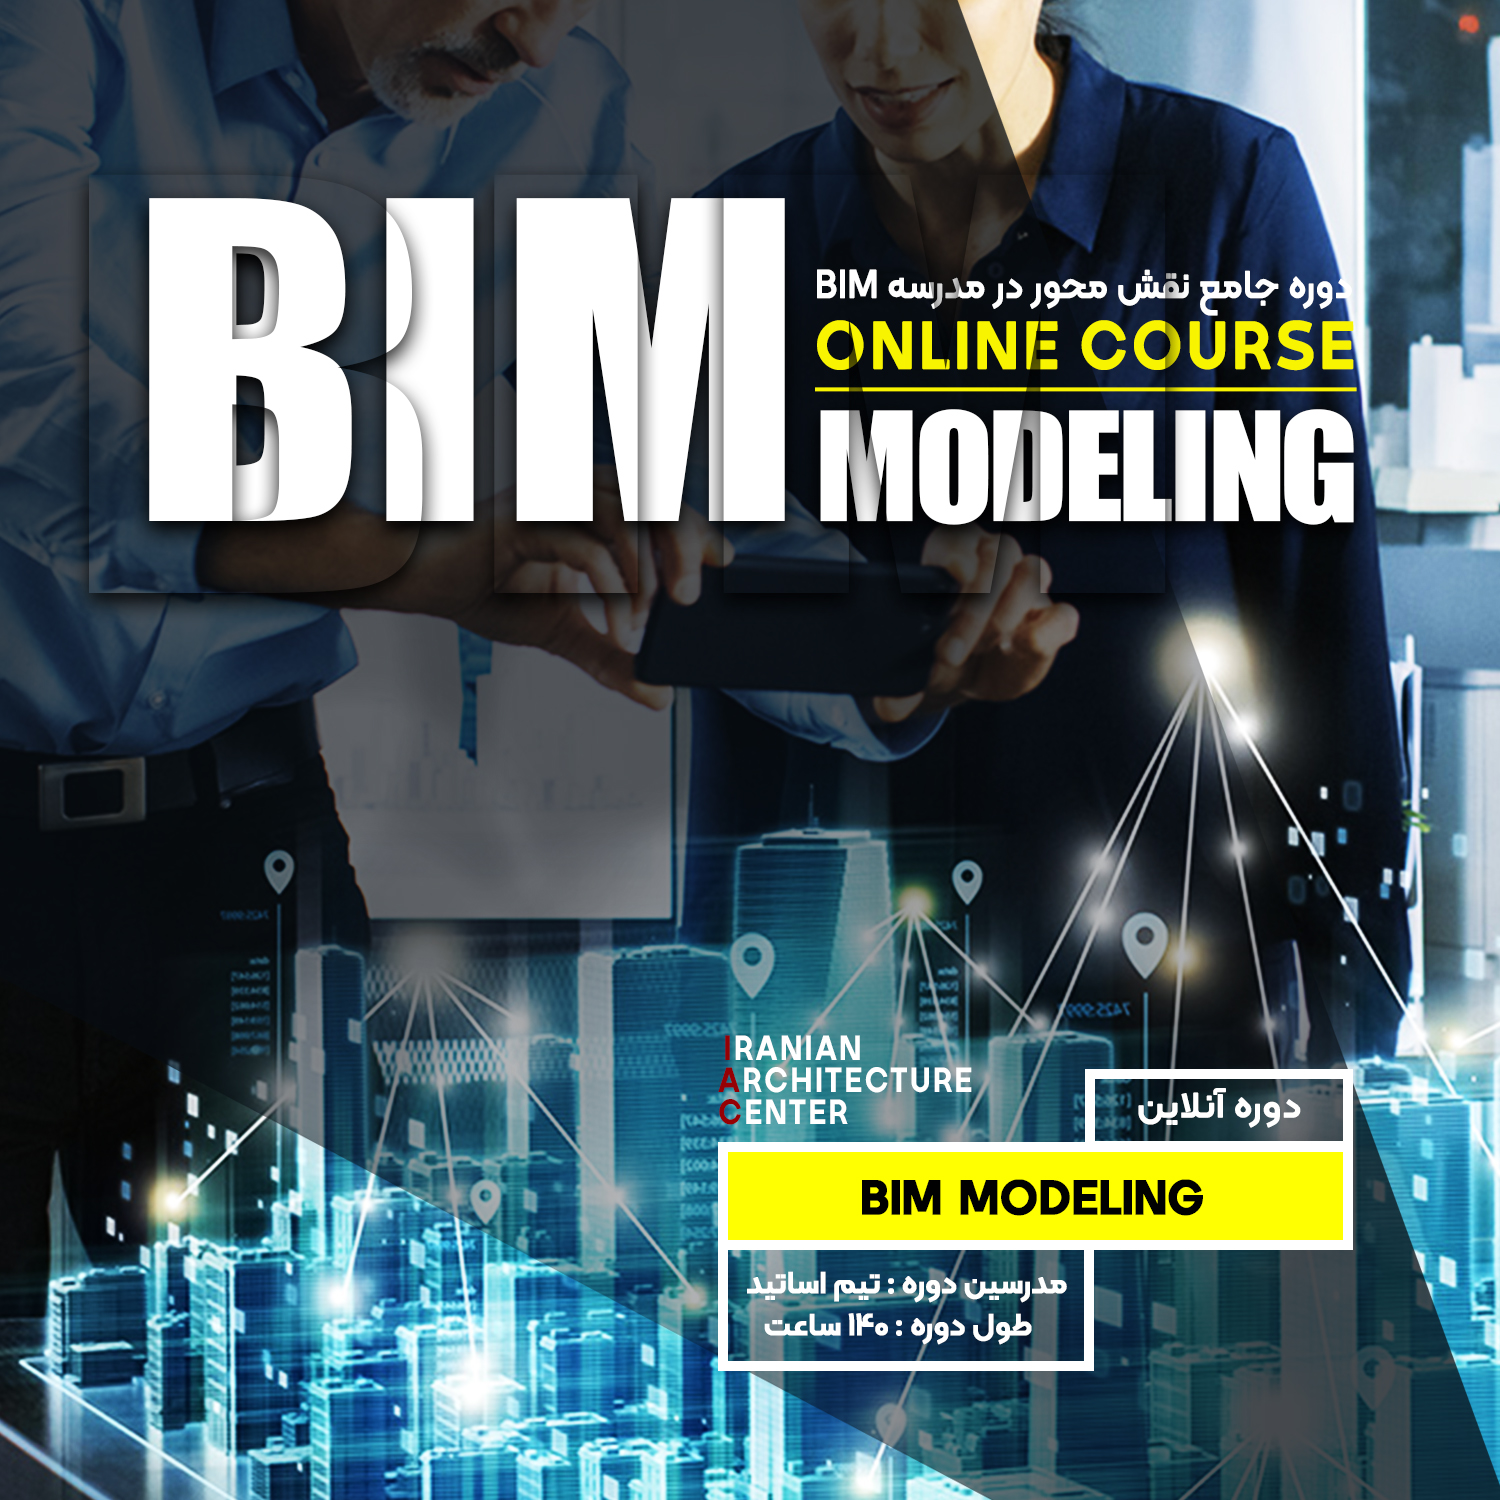  BIM Modeling